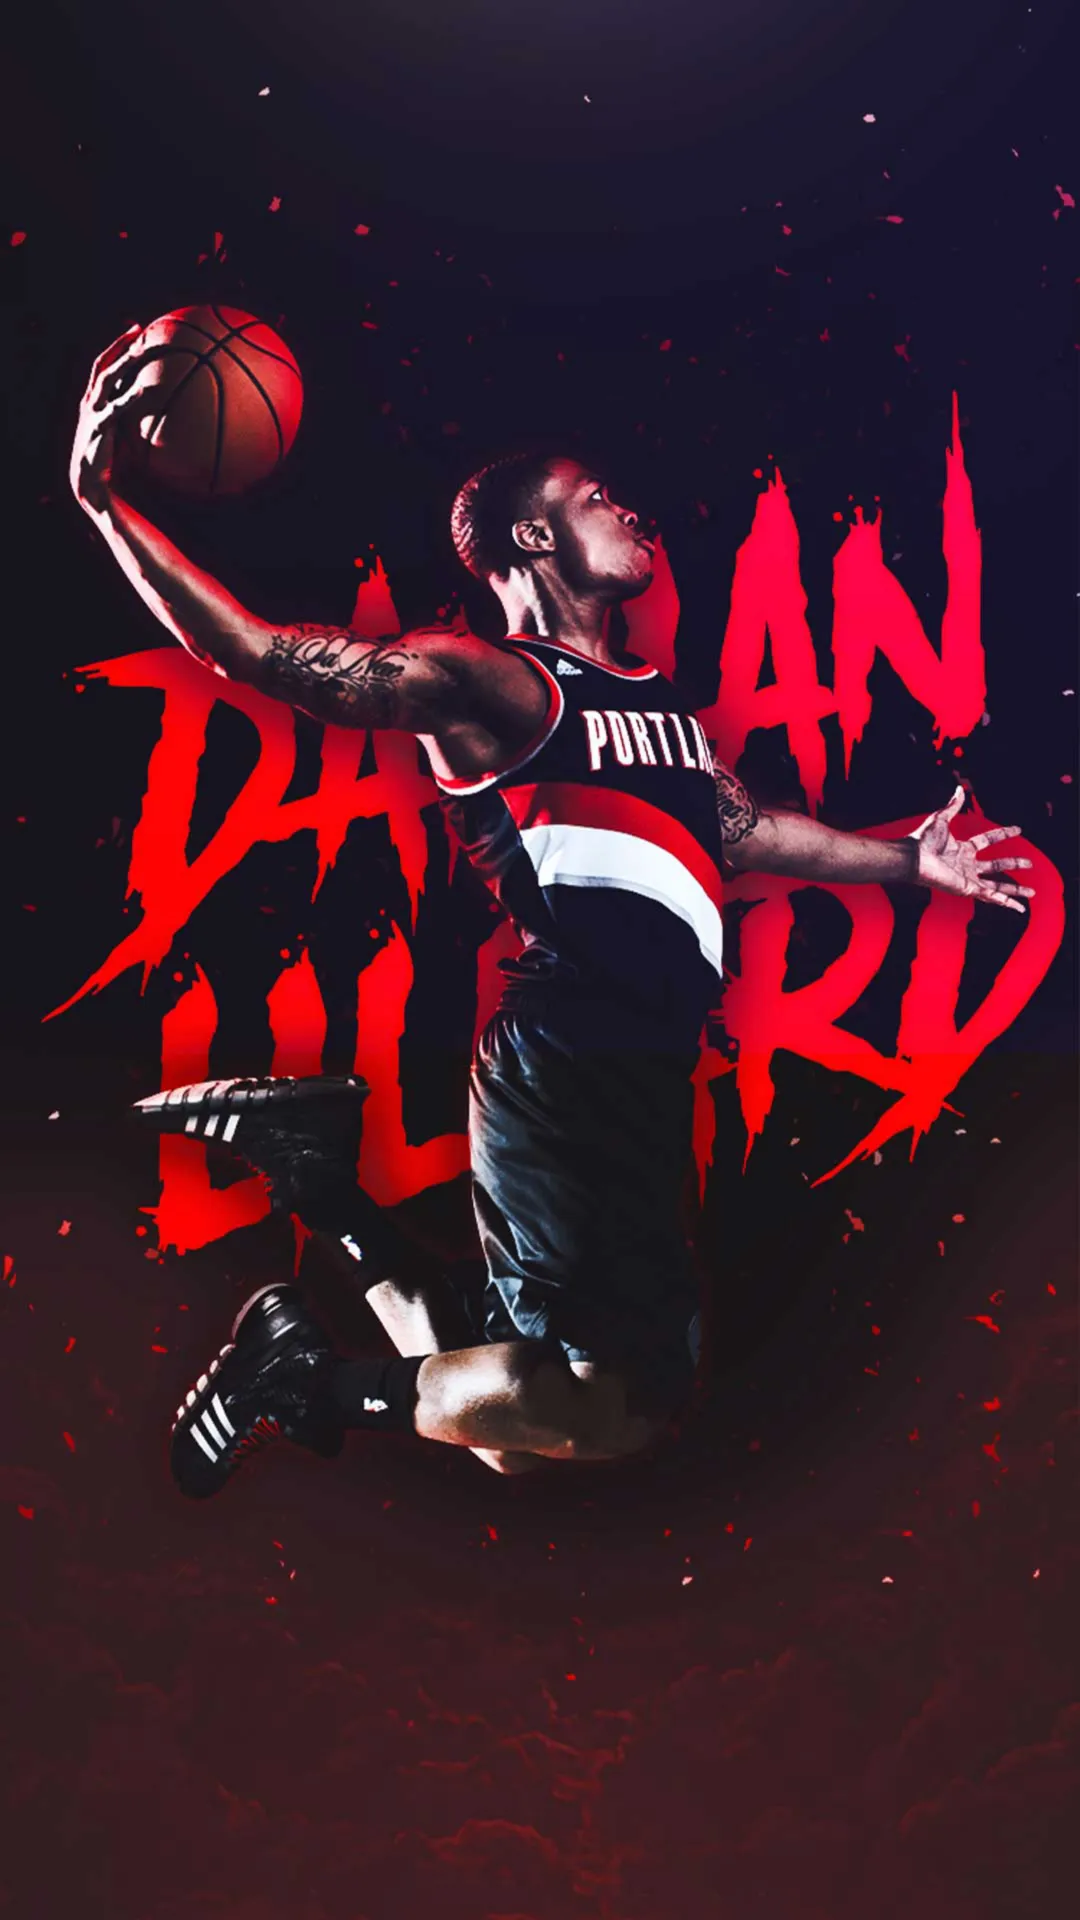 thumb for Hd Damian Lillard Basketball Player Wallpaper